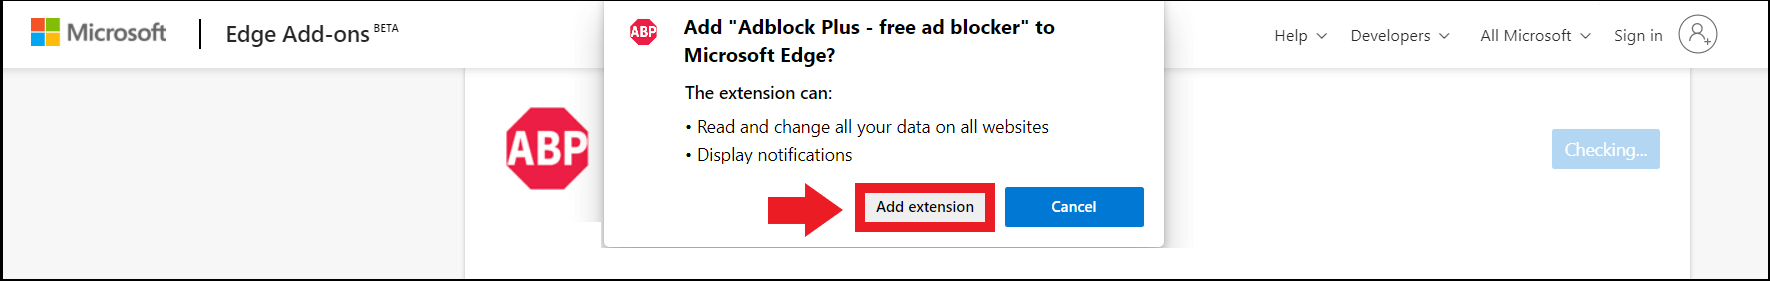 Adblock Plus installation via the Edge Add ons page